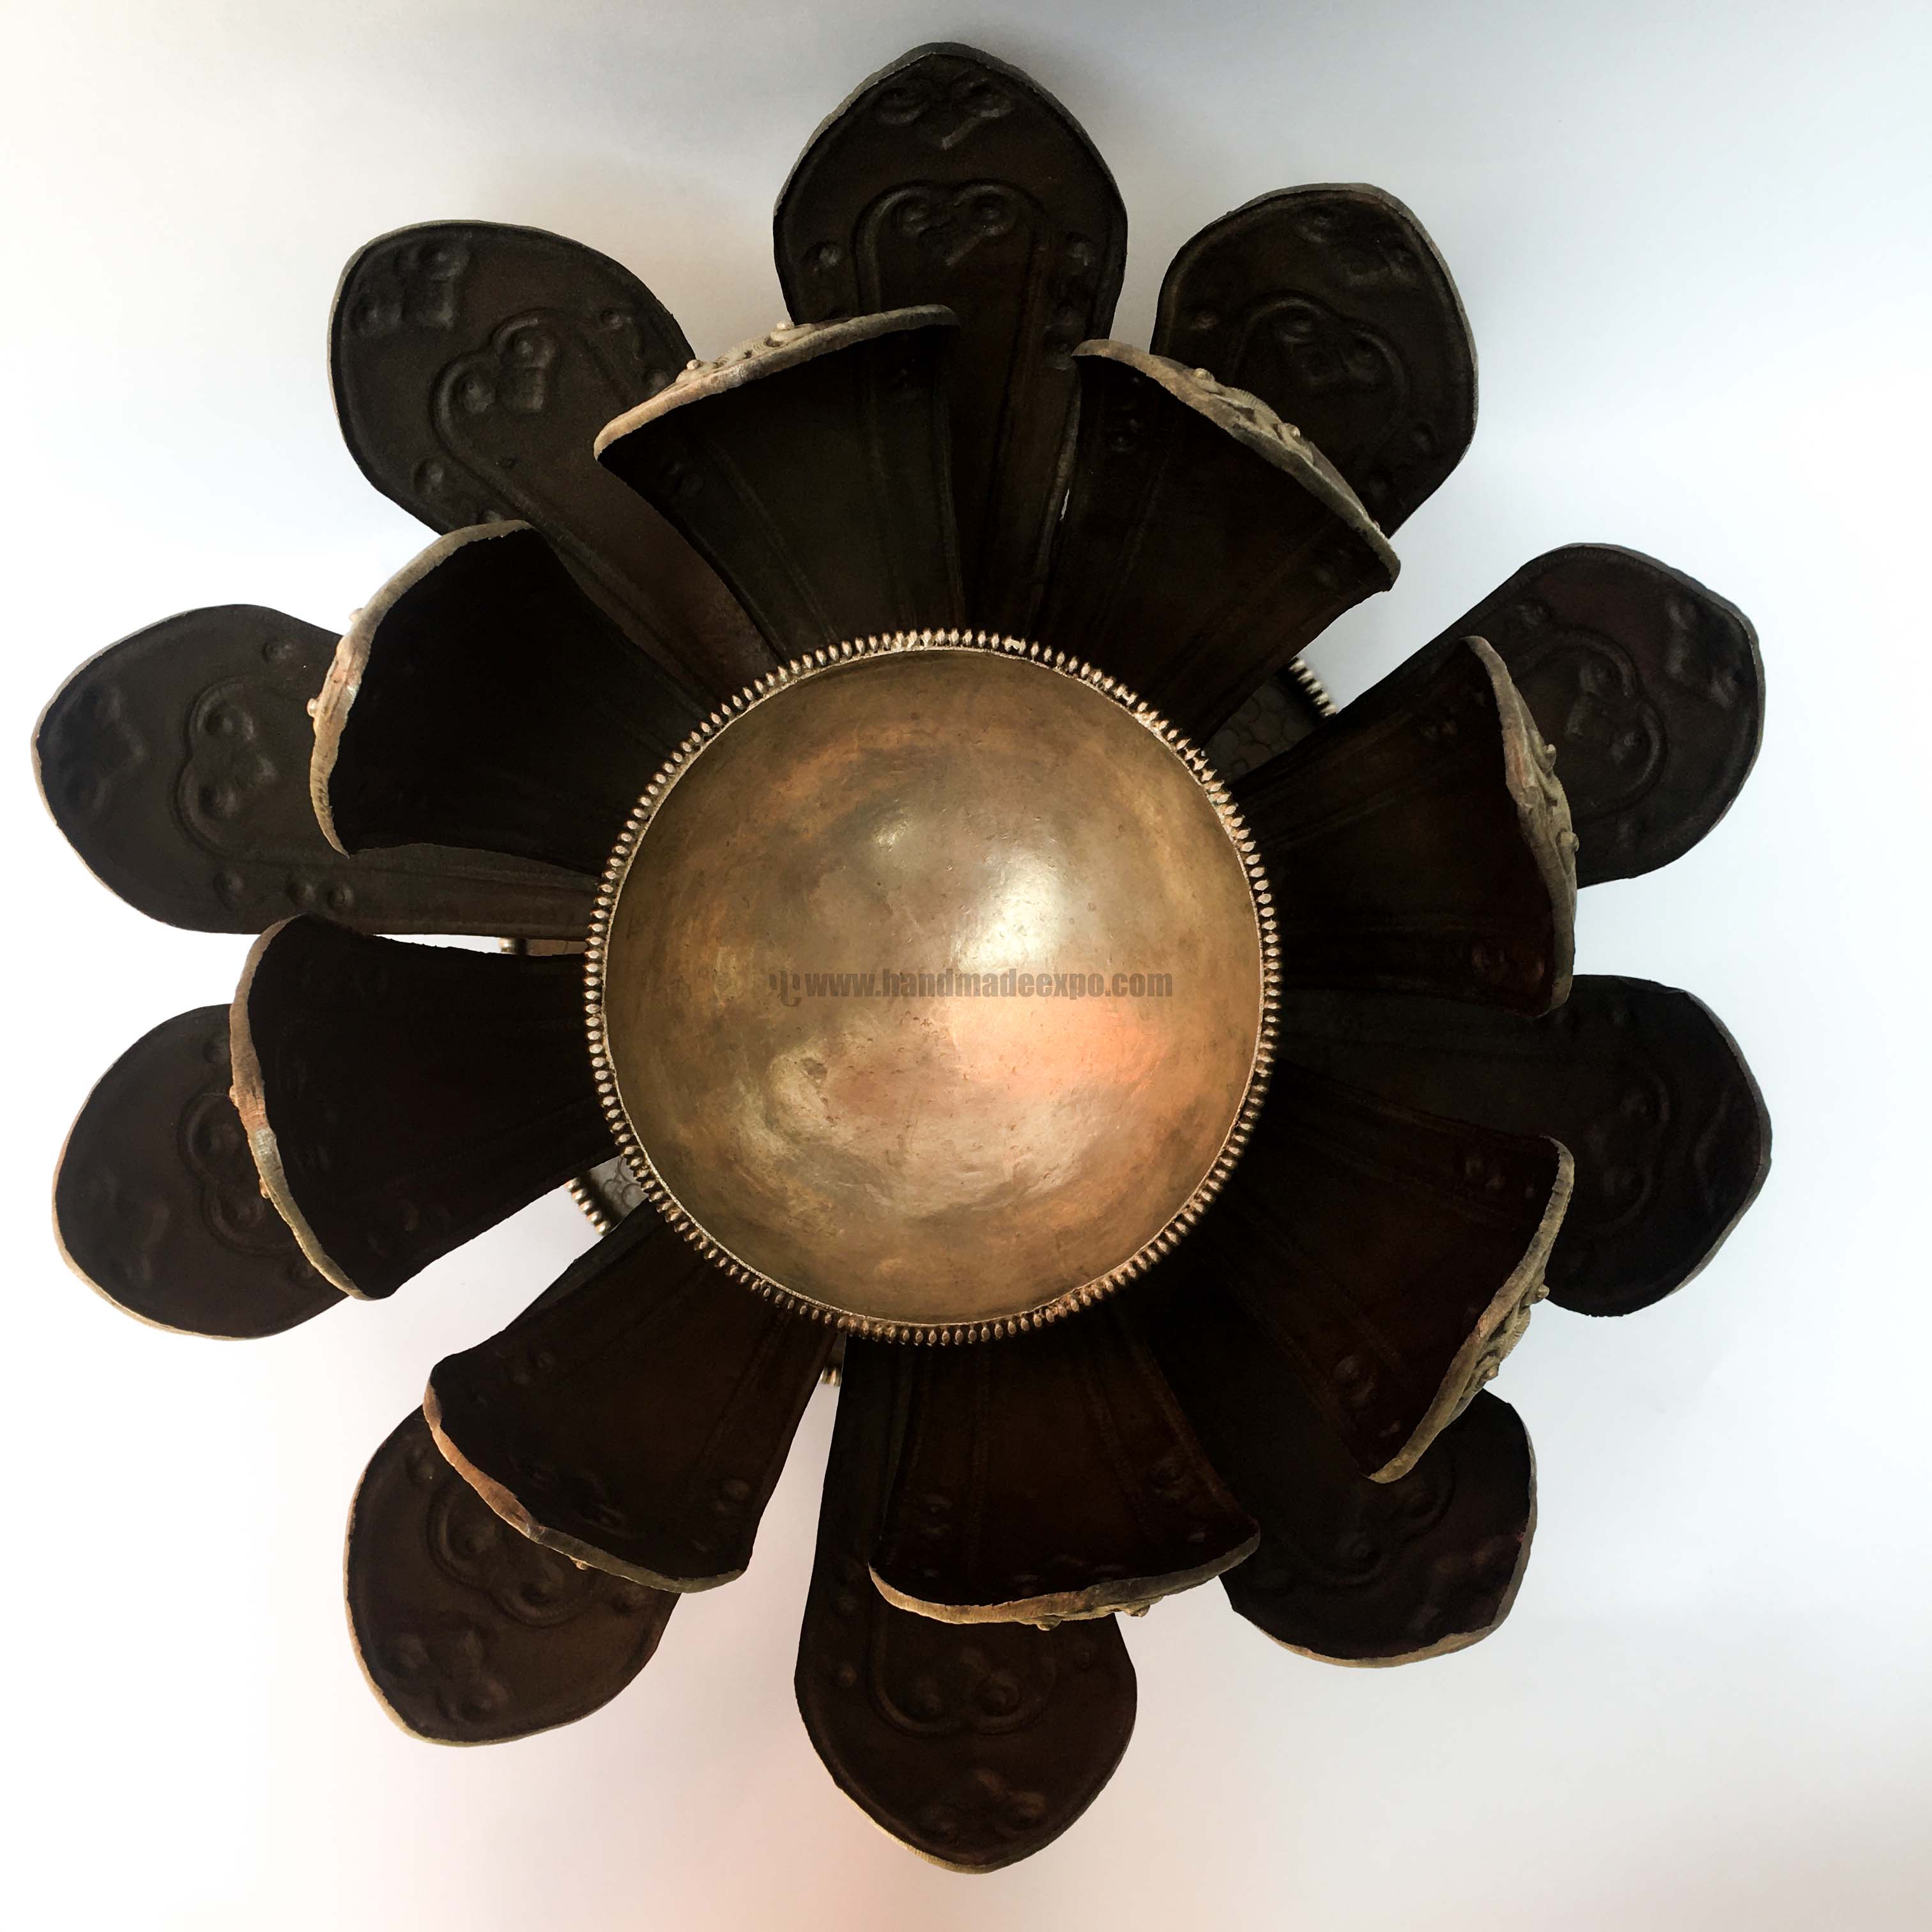 Hand Beaten Metal Incense Burner Lotus Flower Design, chocolate Oxidized